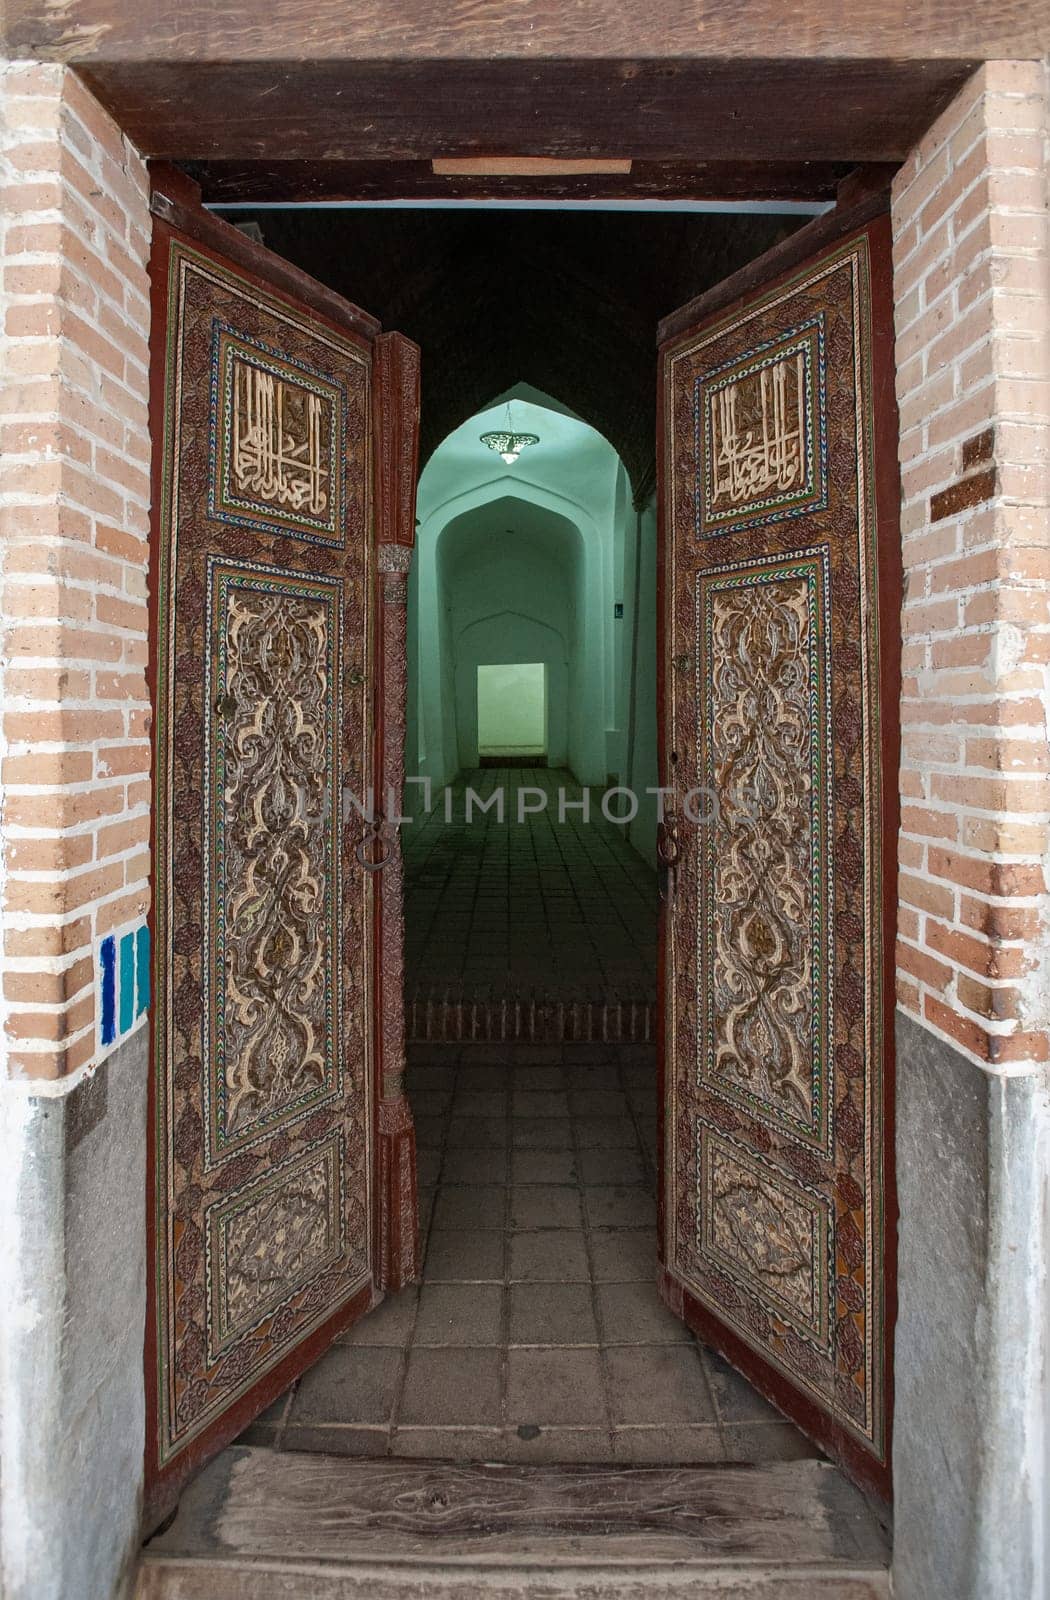 The Shahi Zinda Memorial Complex in Samarkand, Uzbekistan by A_Karim